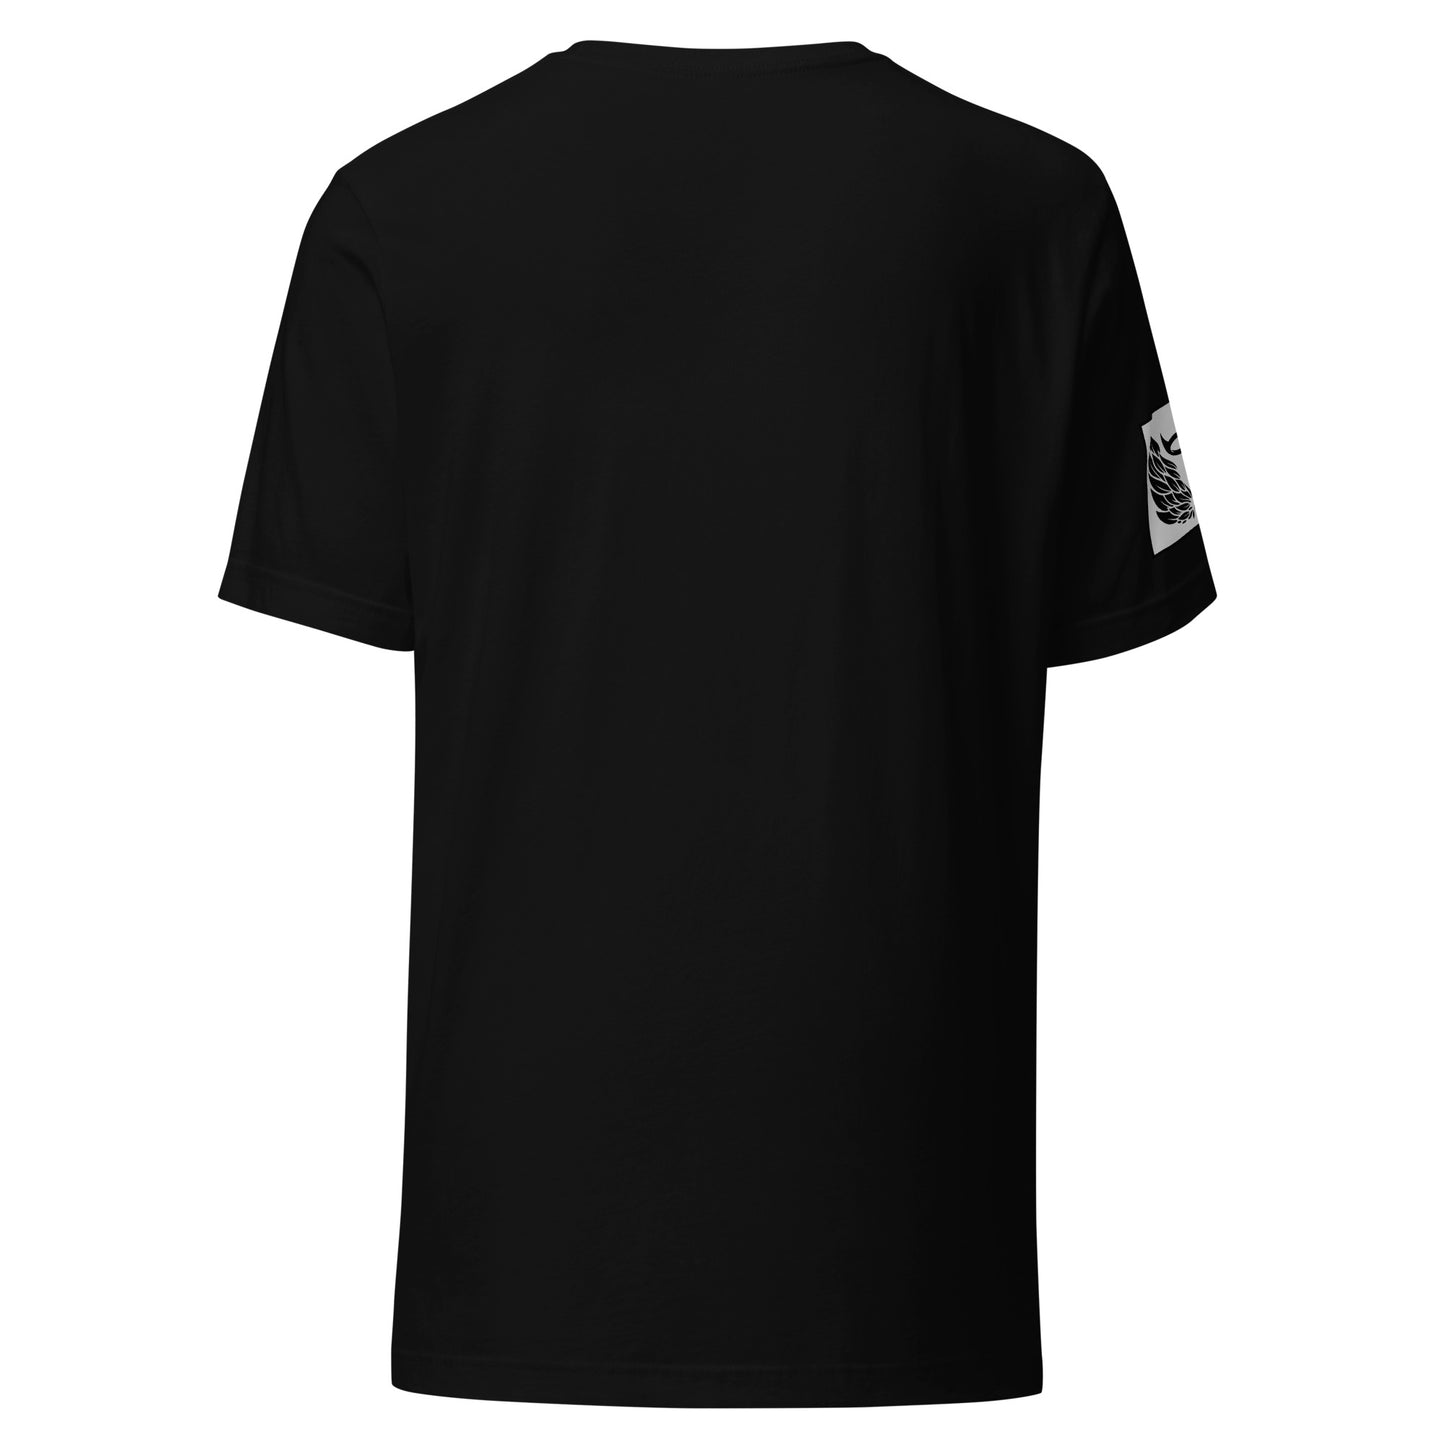 BadA** Jesus Boy Black Unisex T-shirt